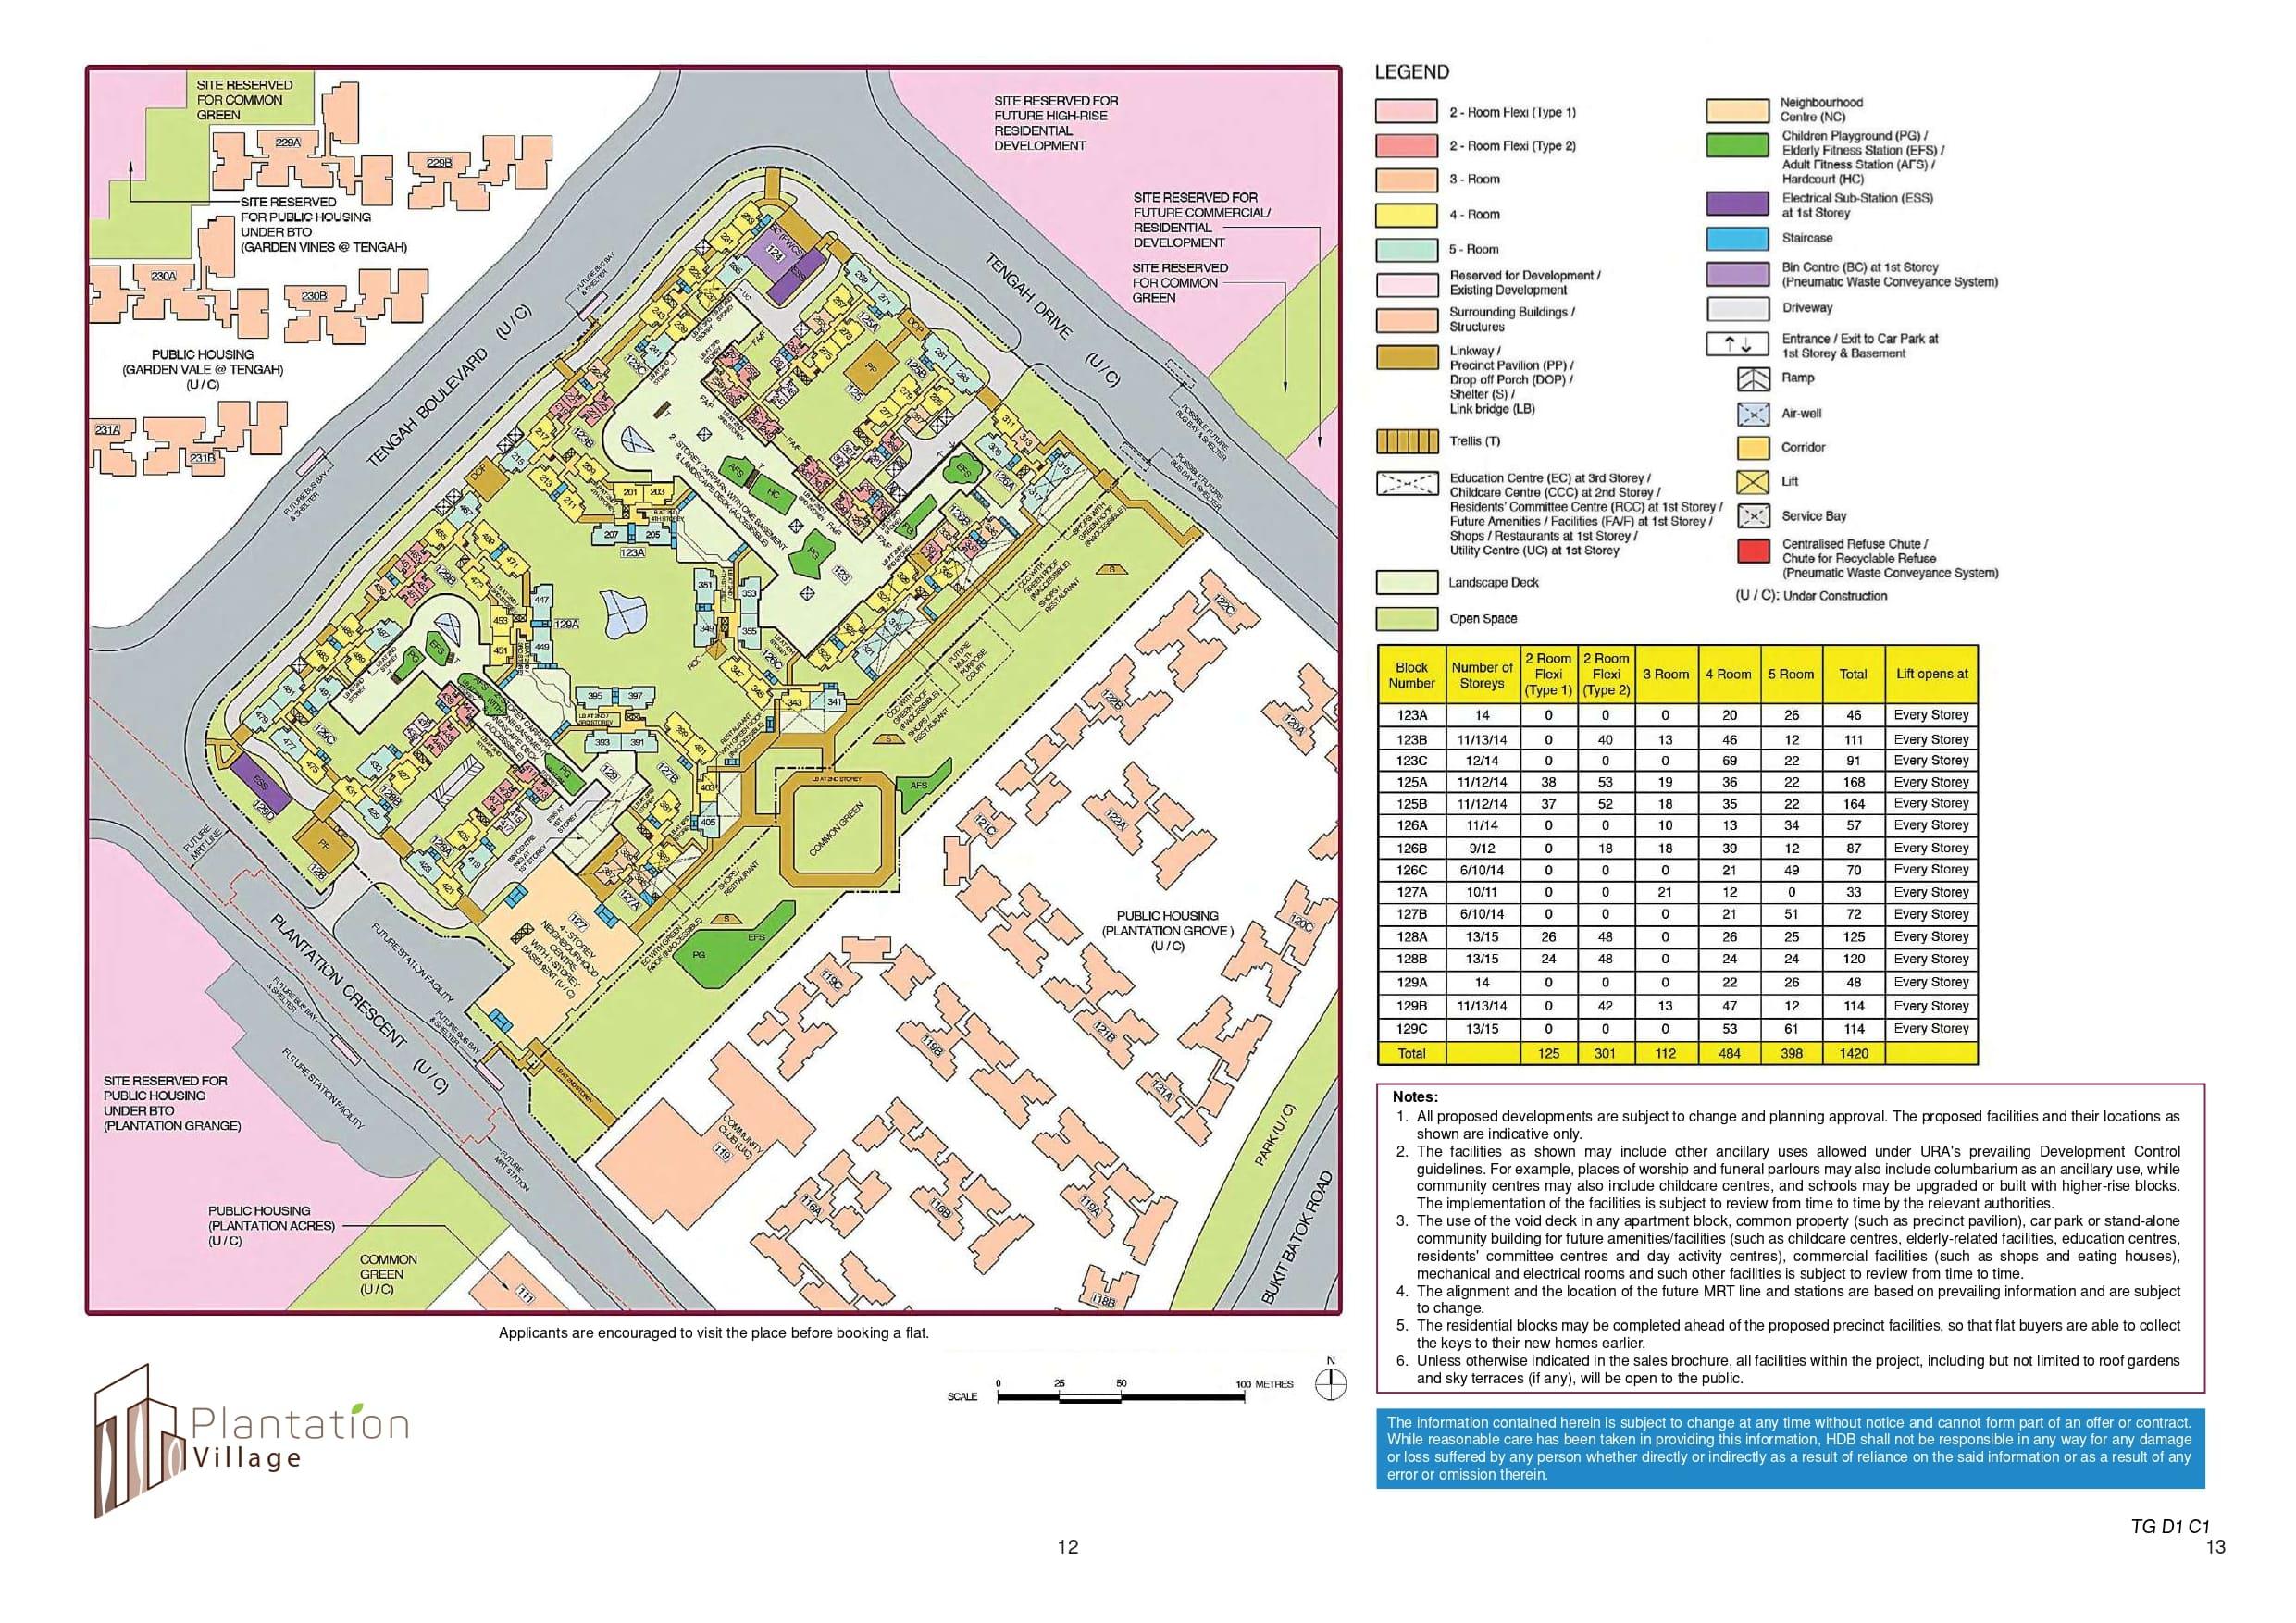 Plantation Village Site Plan